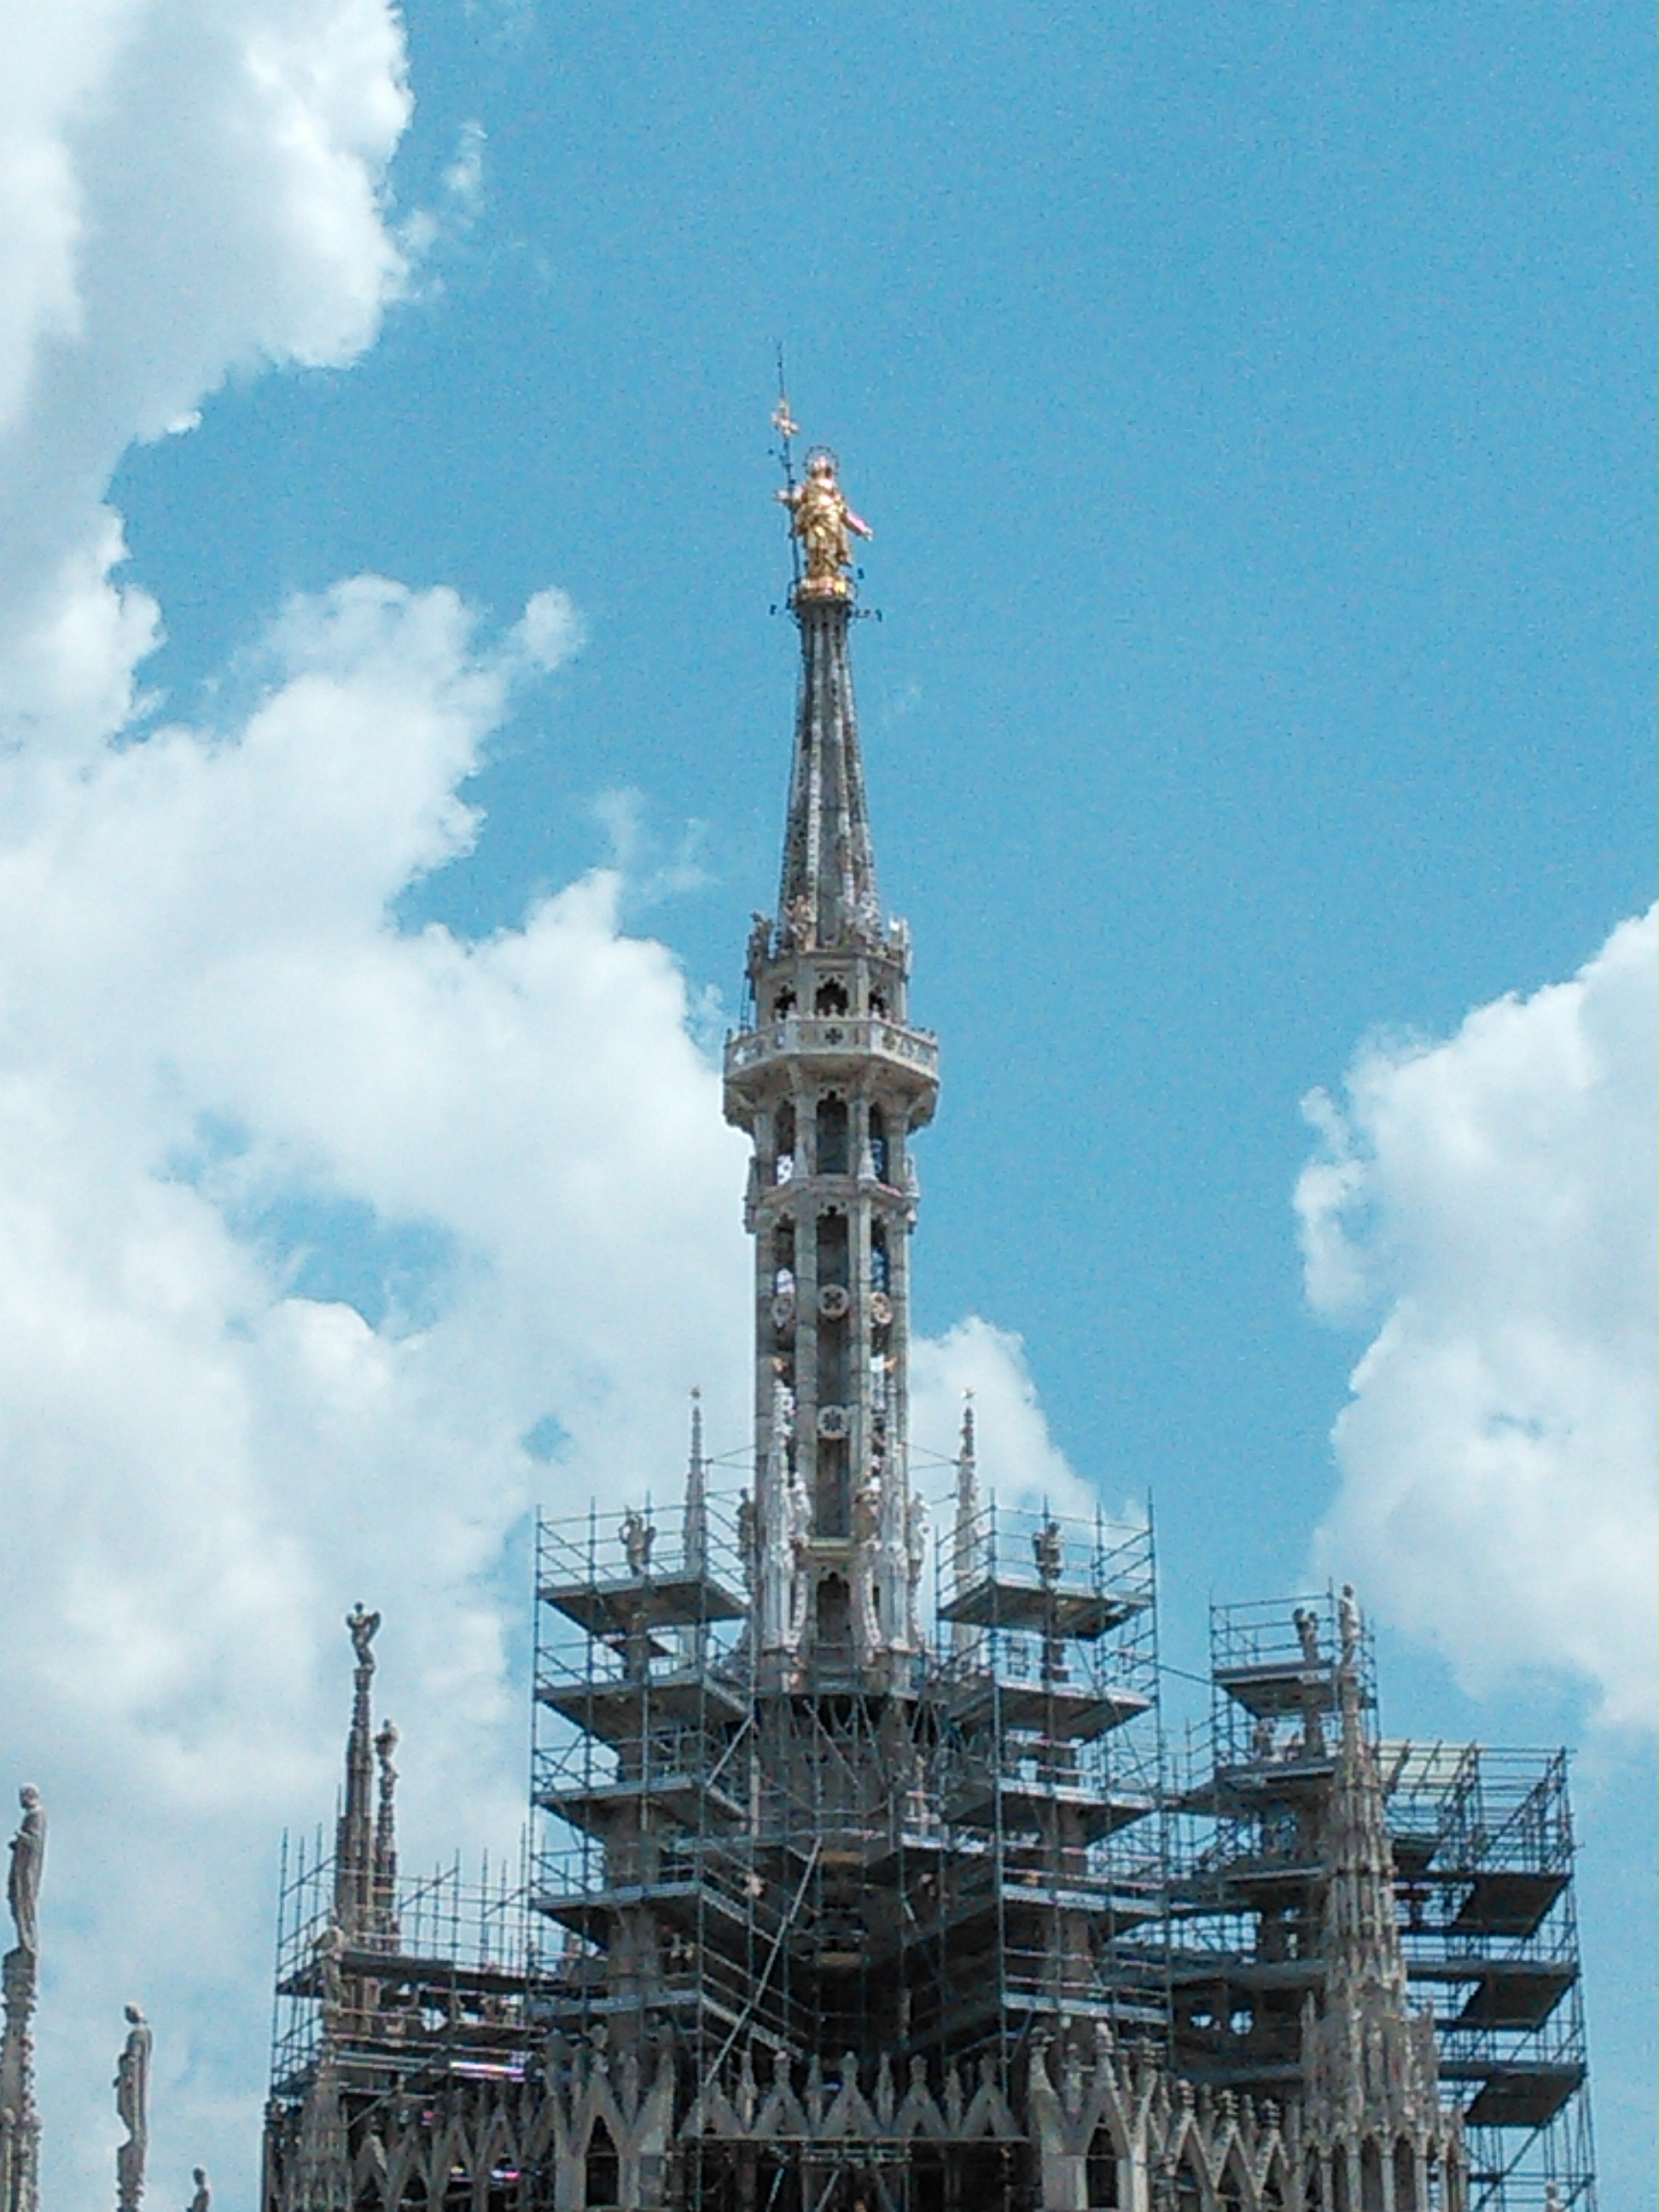 Duomo Virgin Mary spire